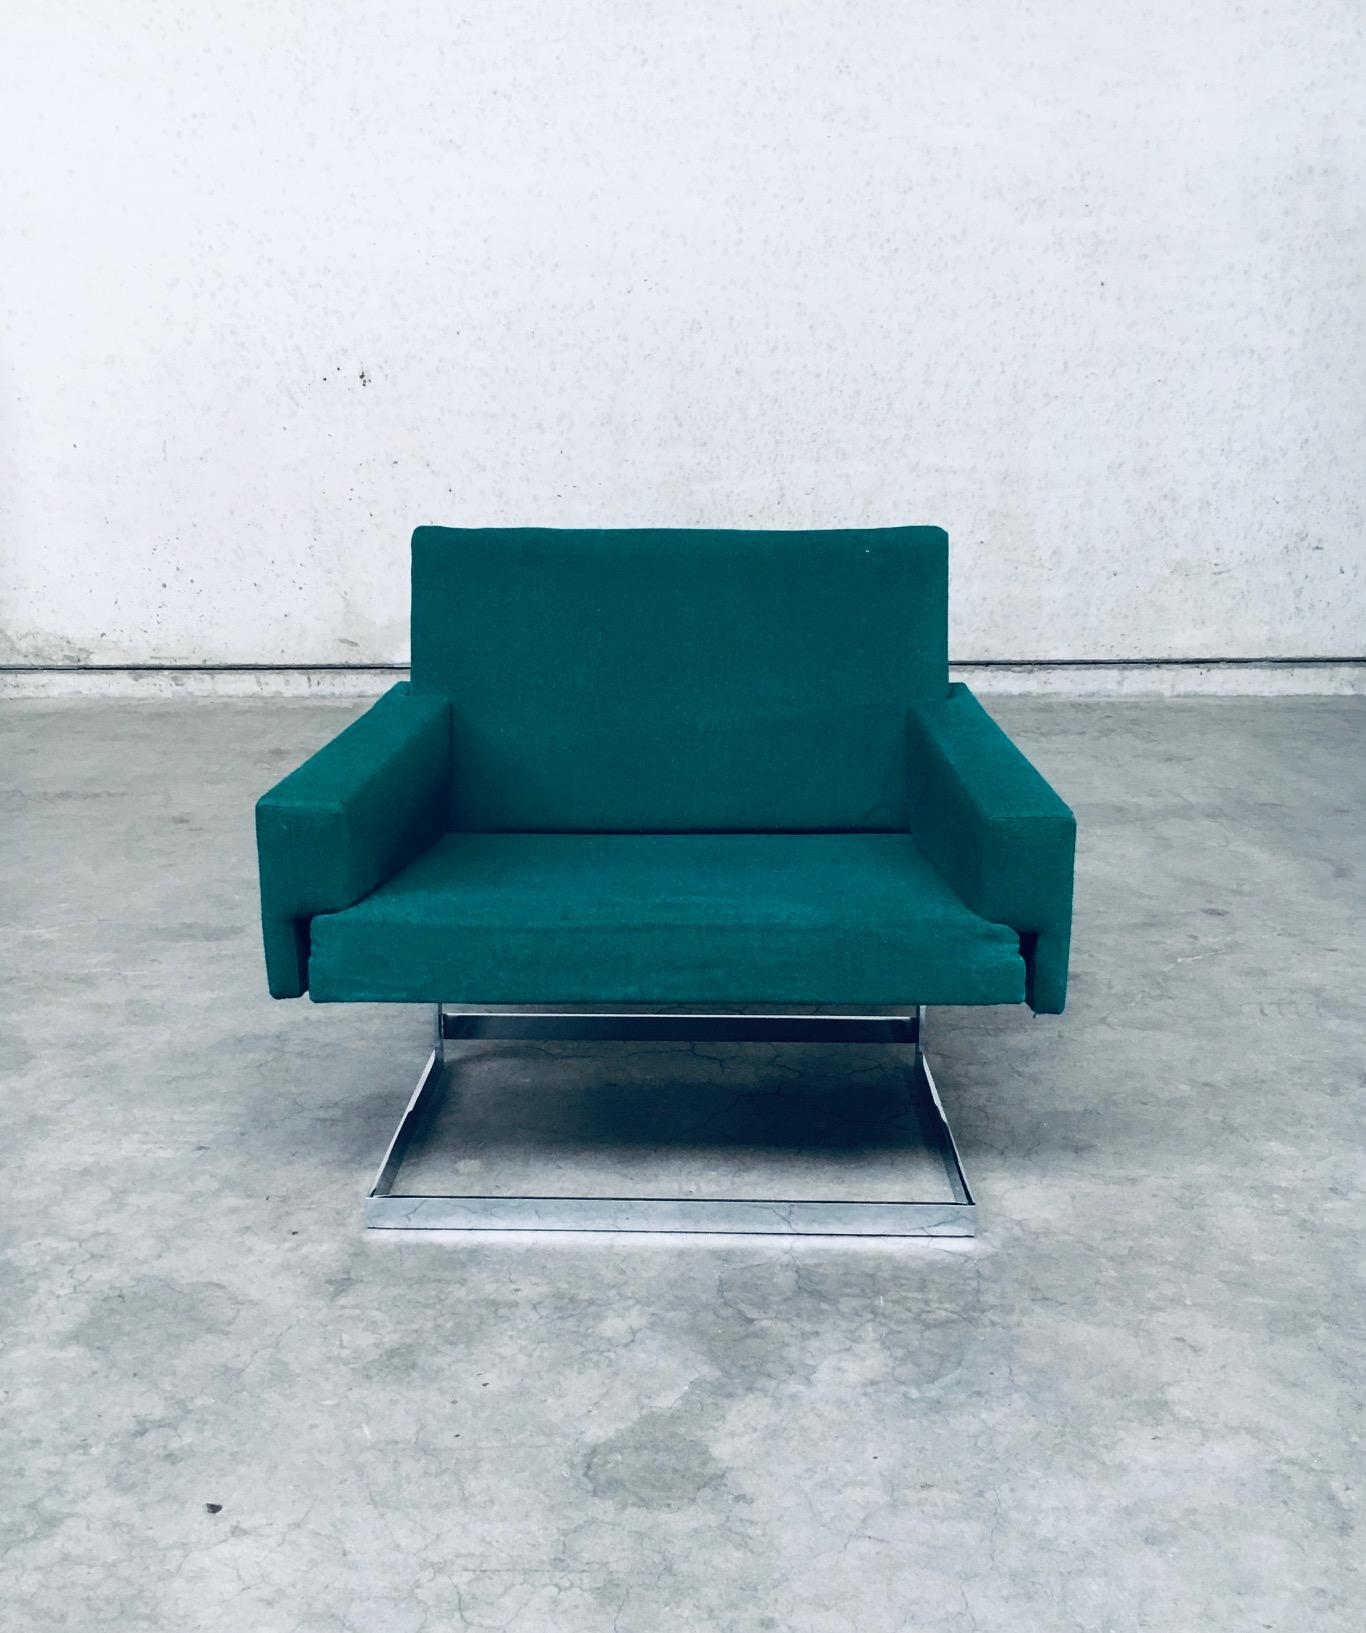 Metal 1960's Midcentury Modern Belgian Design Floating Lounge Chair For Sale